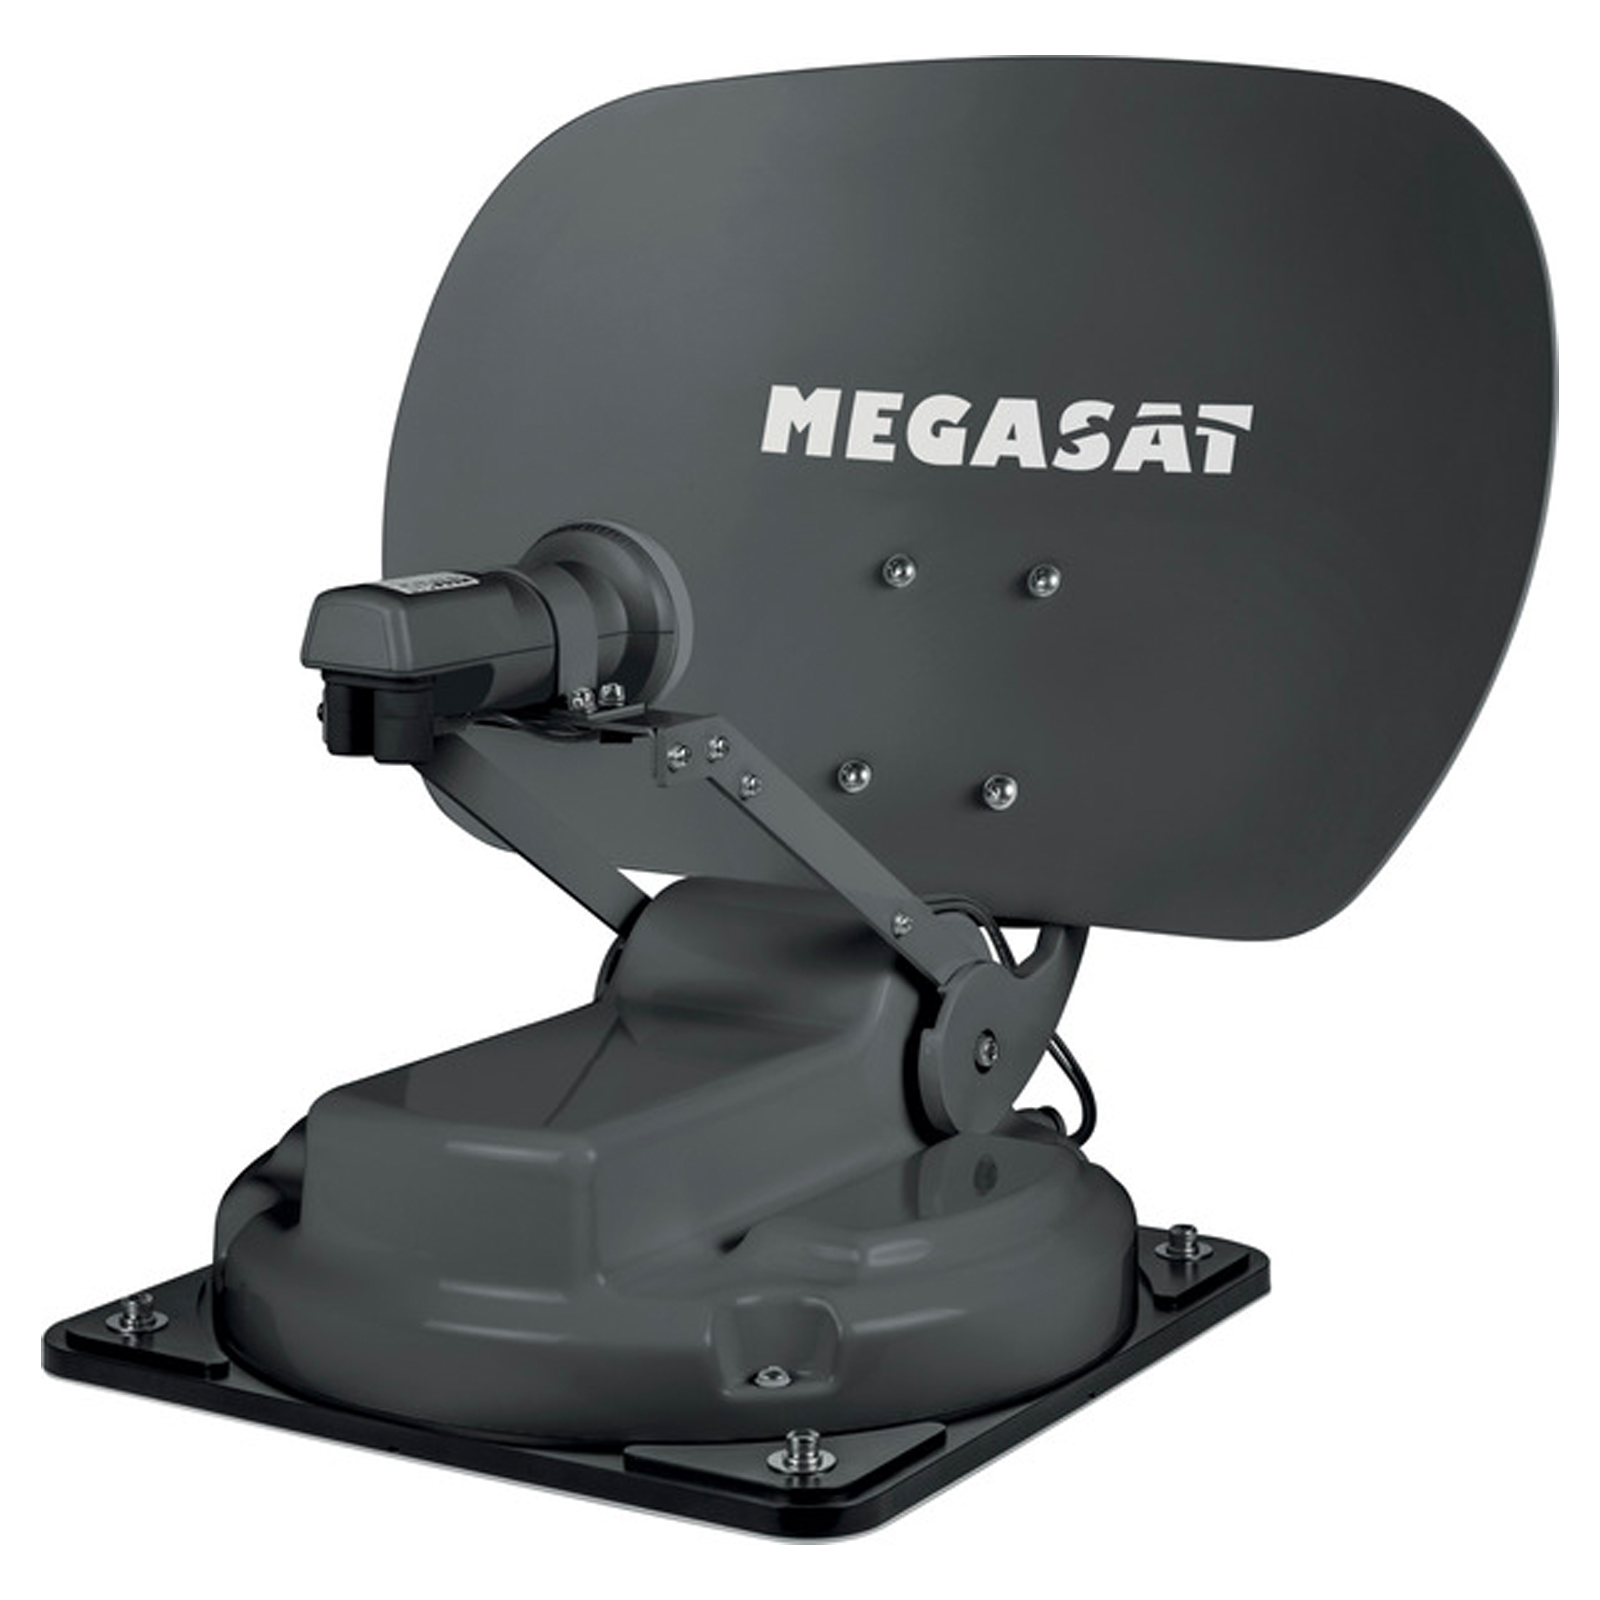 Megasat Caravanman kompakt 3 Graphit vollautomatische Sat Anlage Single, Bluetooth